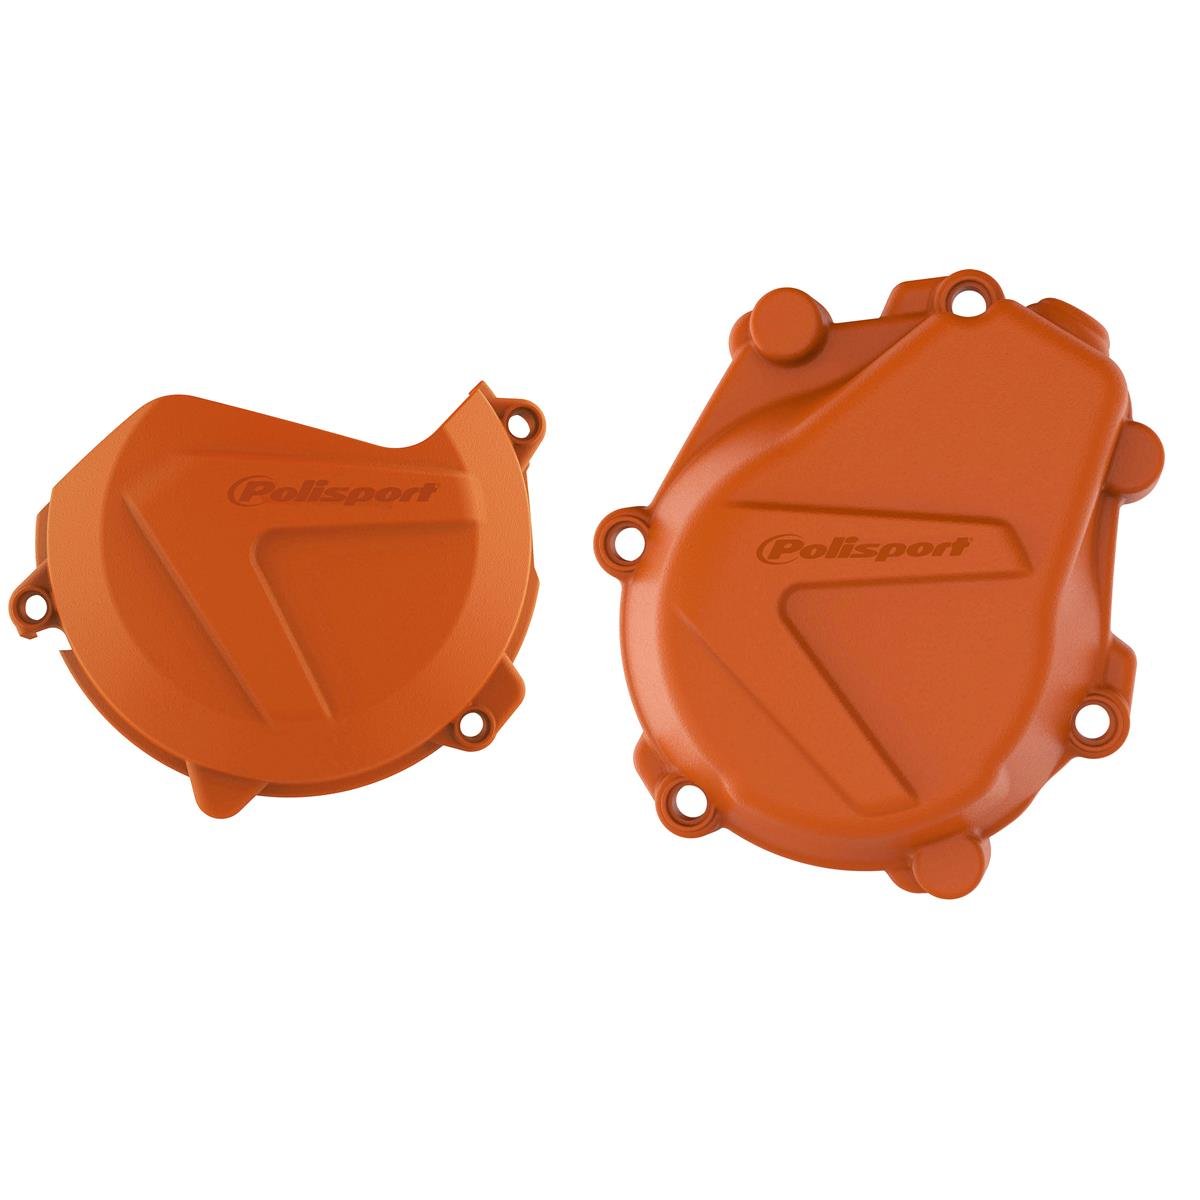 Polisport Clutch/Ignition Cover Protection  KTM SX-F 450 16-20, Orange